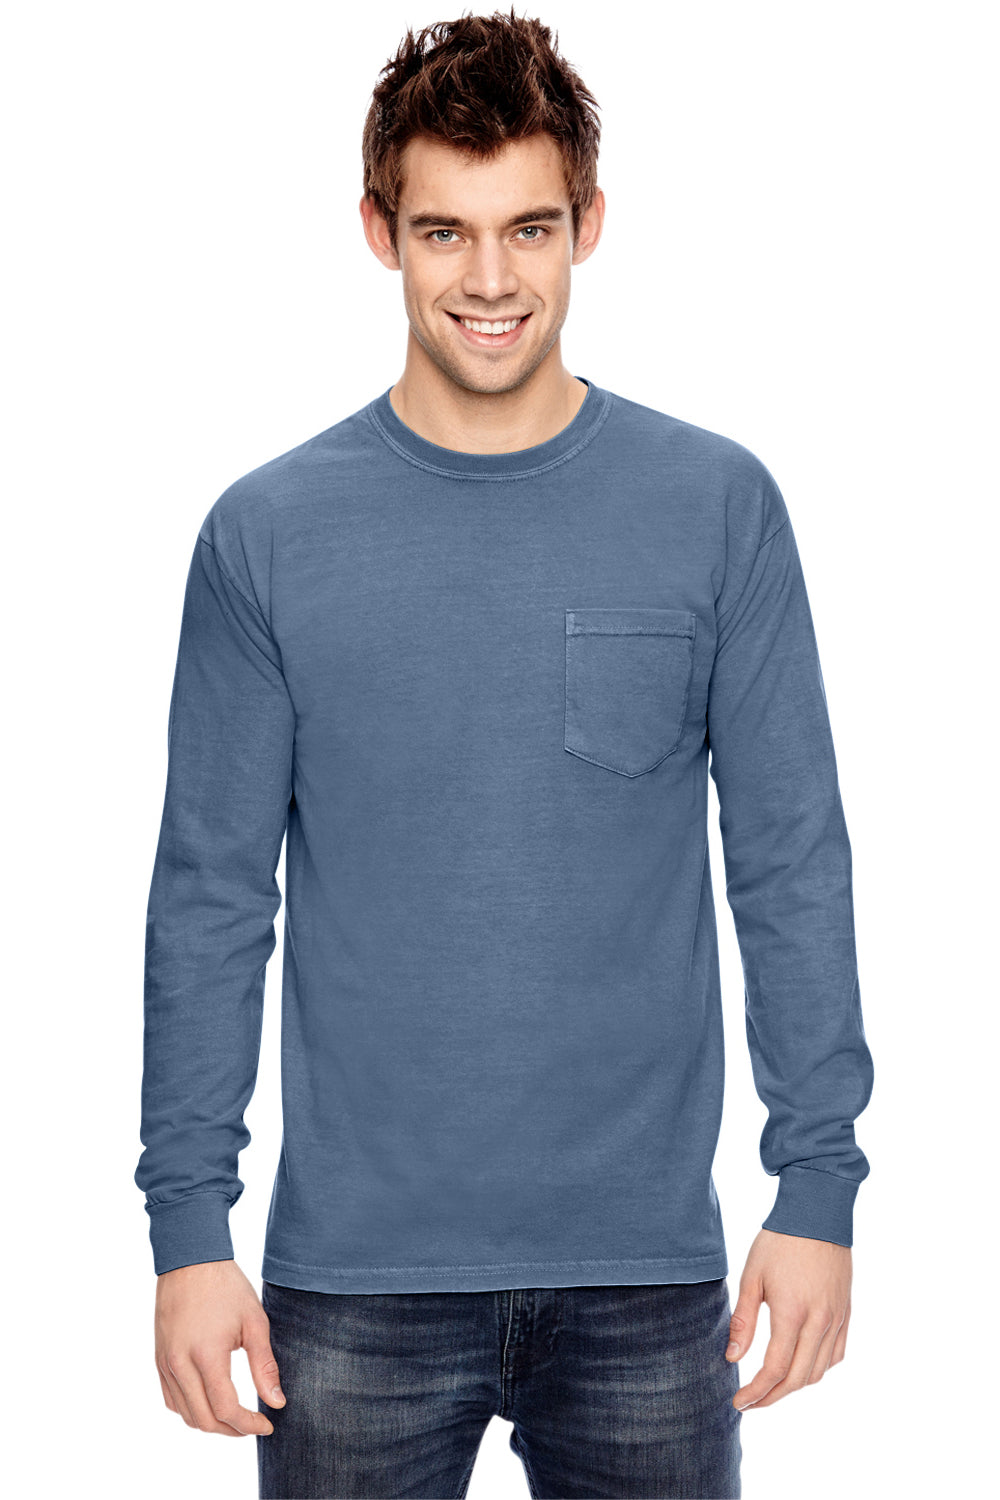 Comfort Colors C4410 Mens Long Sleeve Crewneck T-Shirt w/ Pocket Blue Jean Front